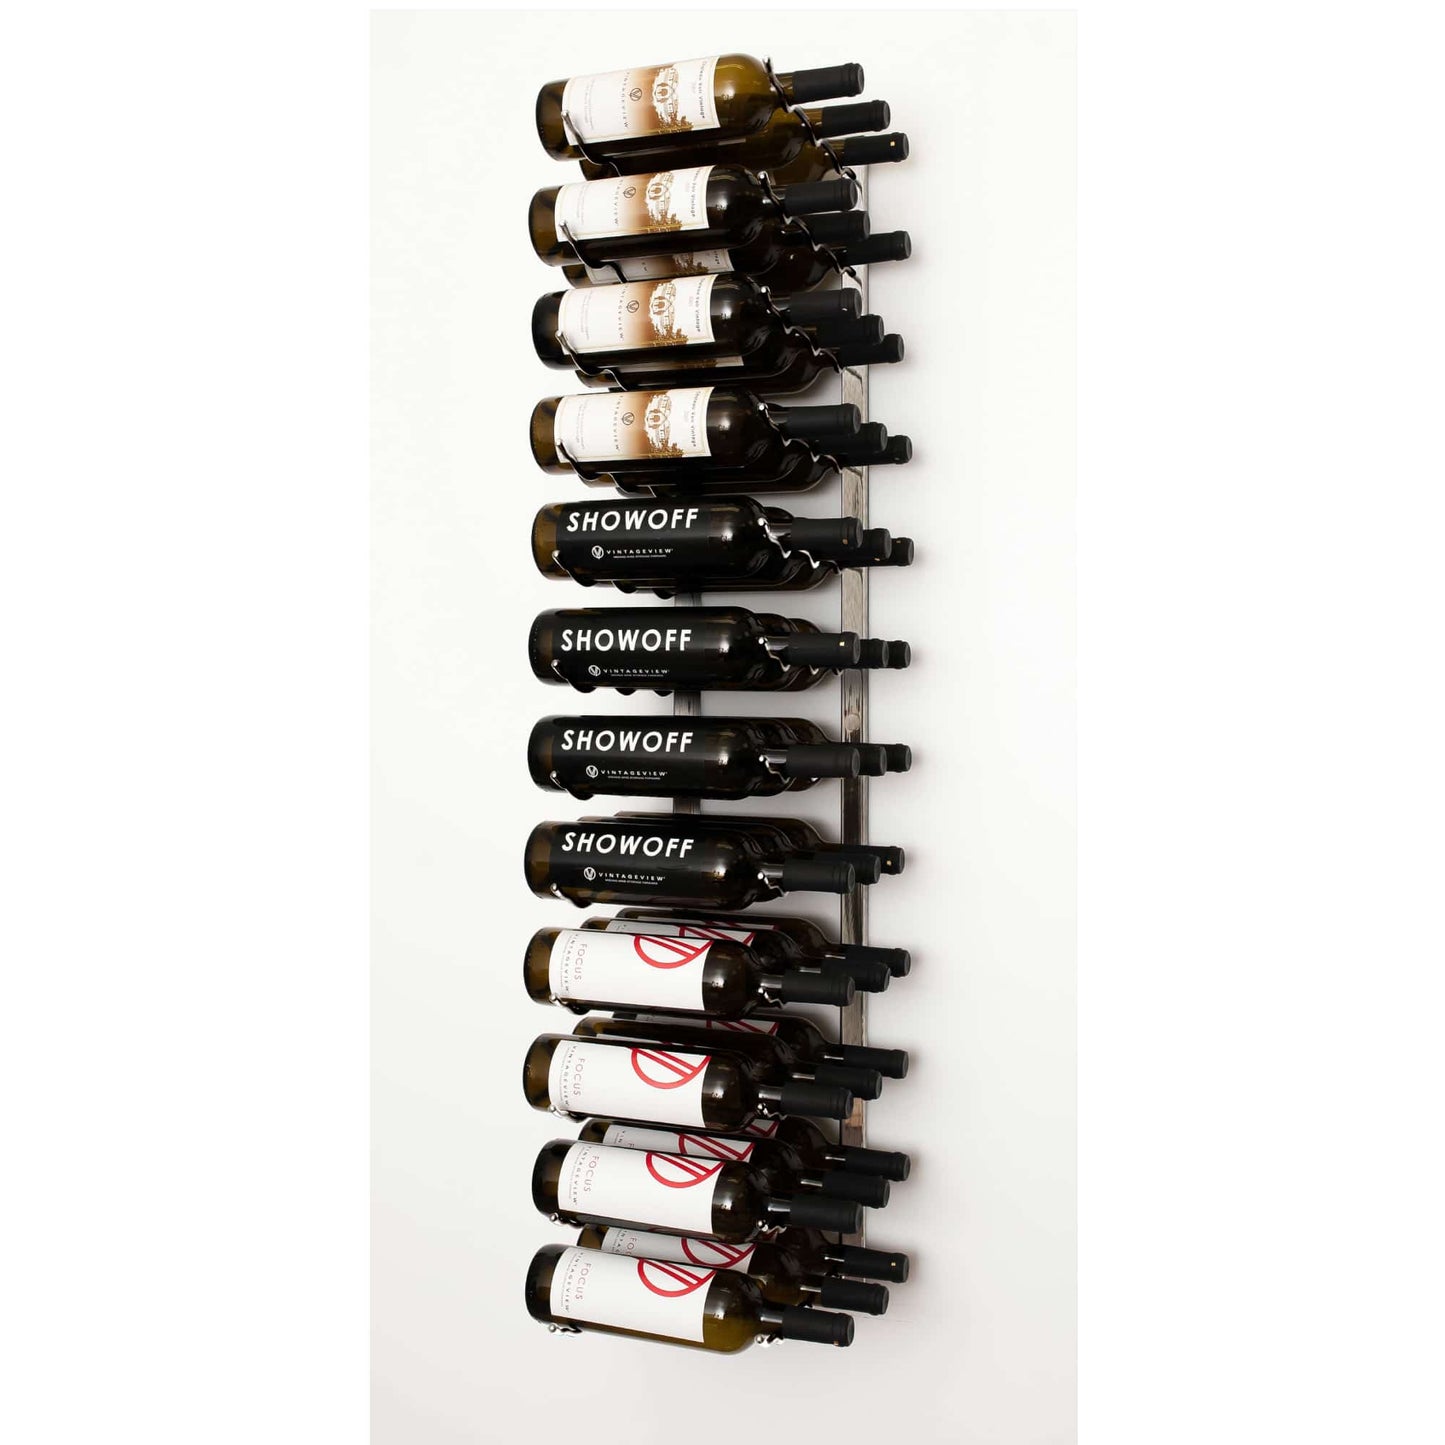 W Series Luxe 4 - Wall Mounted Metal Wine Bottle Storage Rack